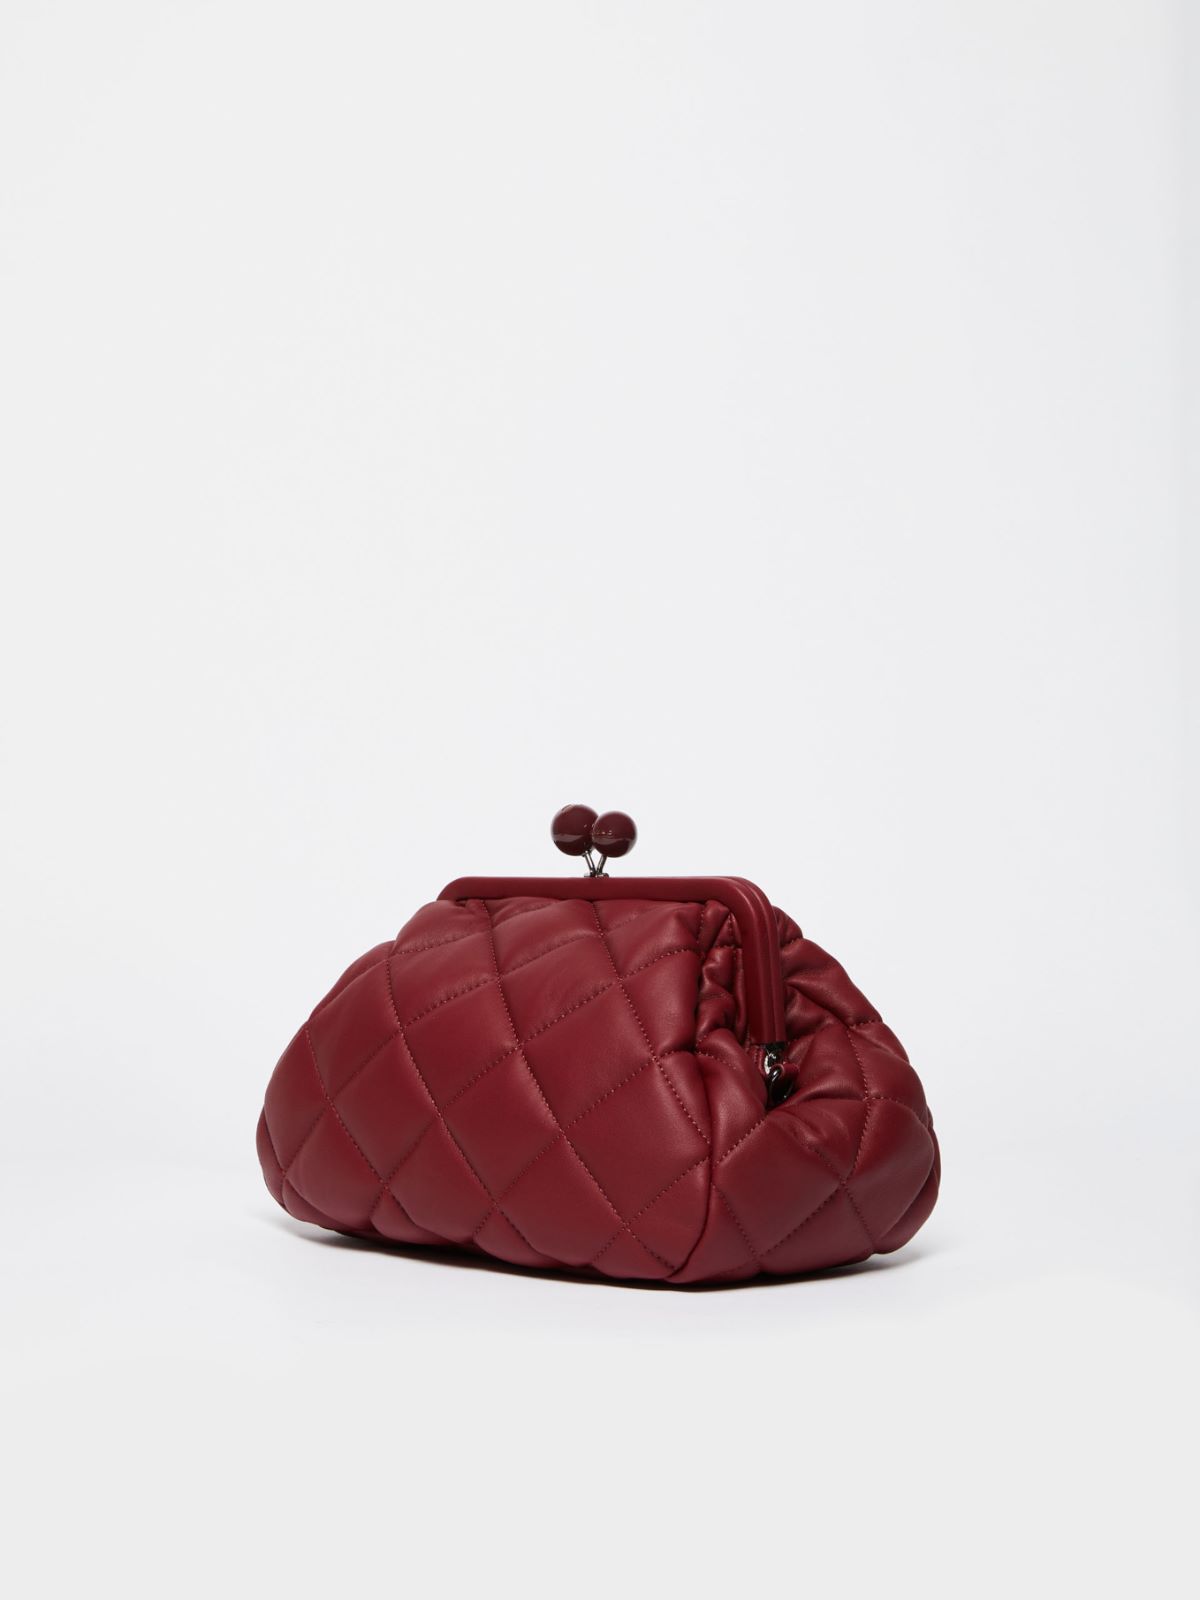 Medium Pasticcino Bag in nappa leather, bordeaux | Weekend Max Mara